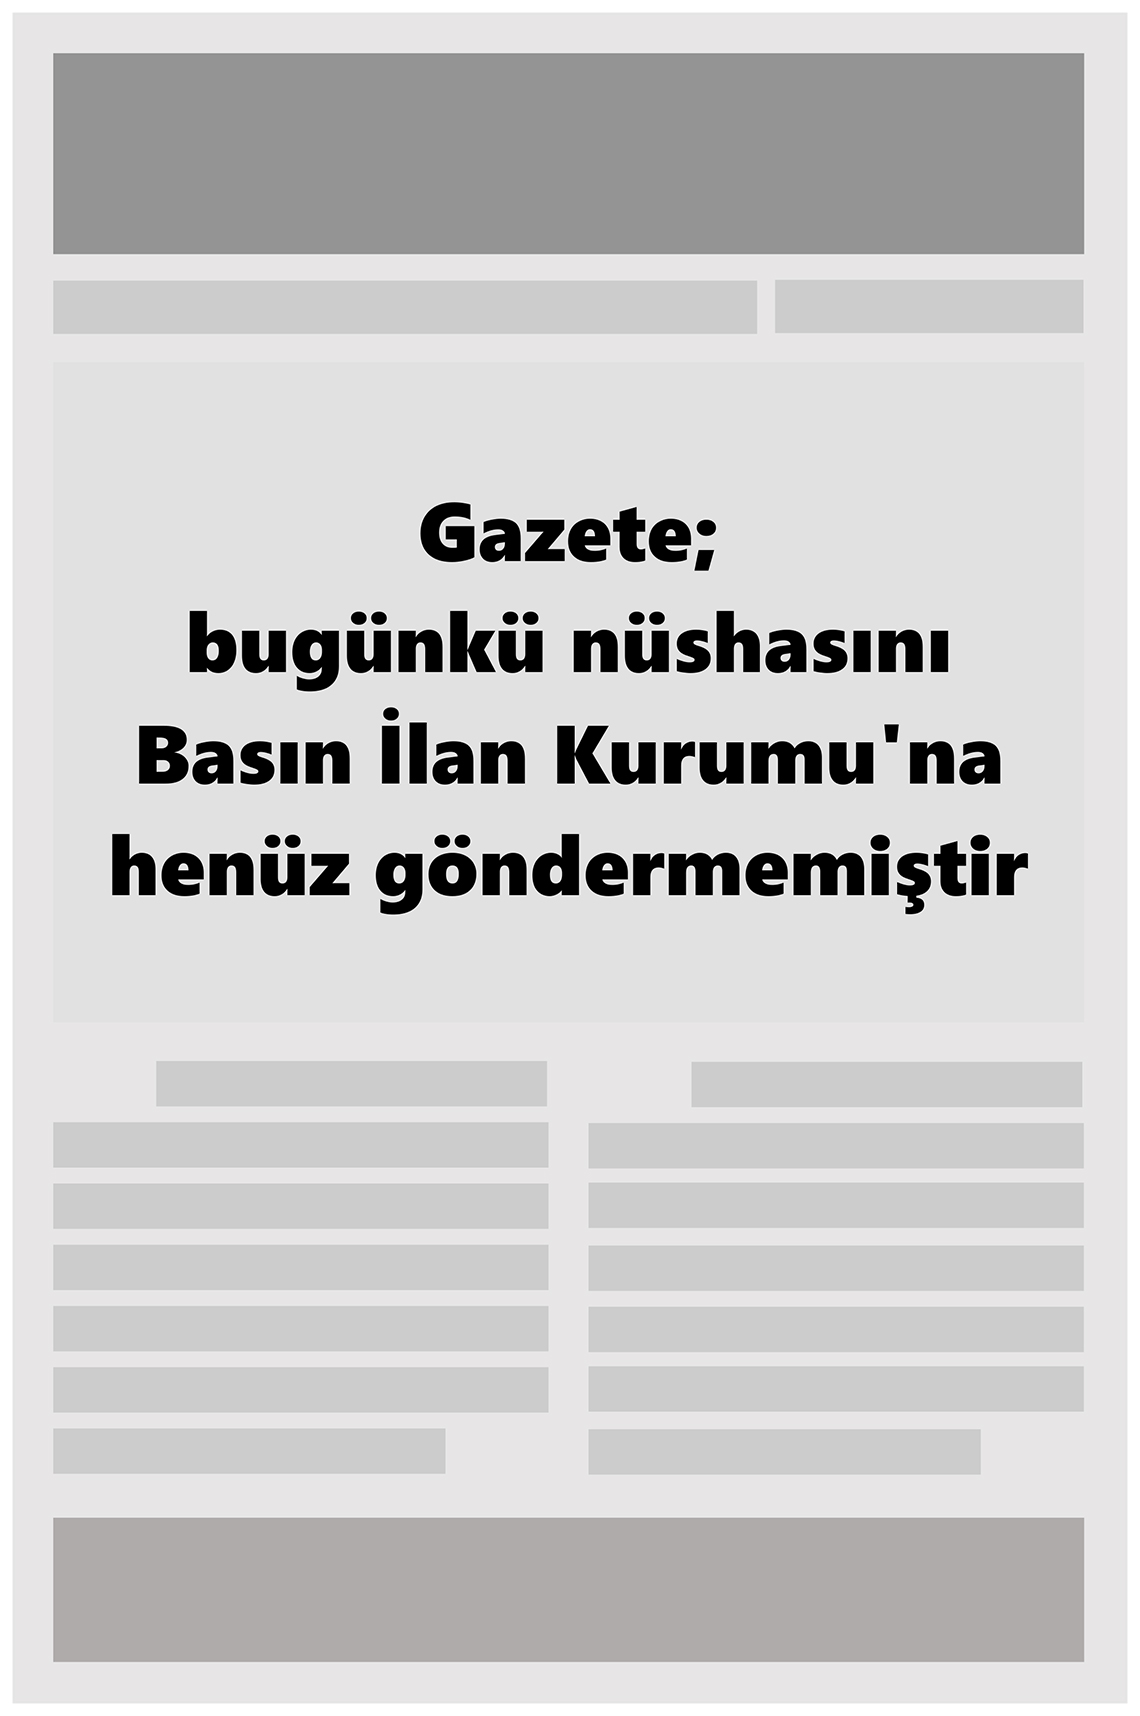 Ticari Hayat Gazete Manşeti